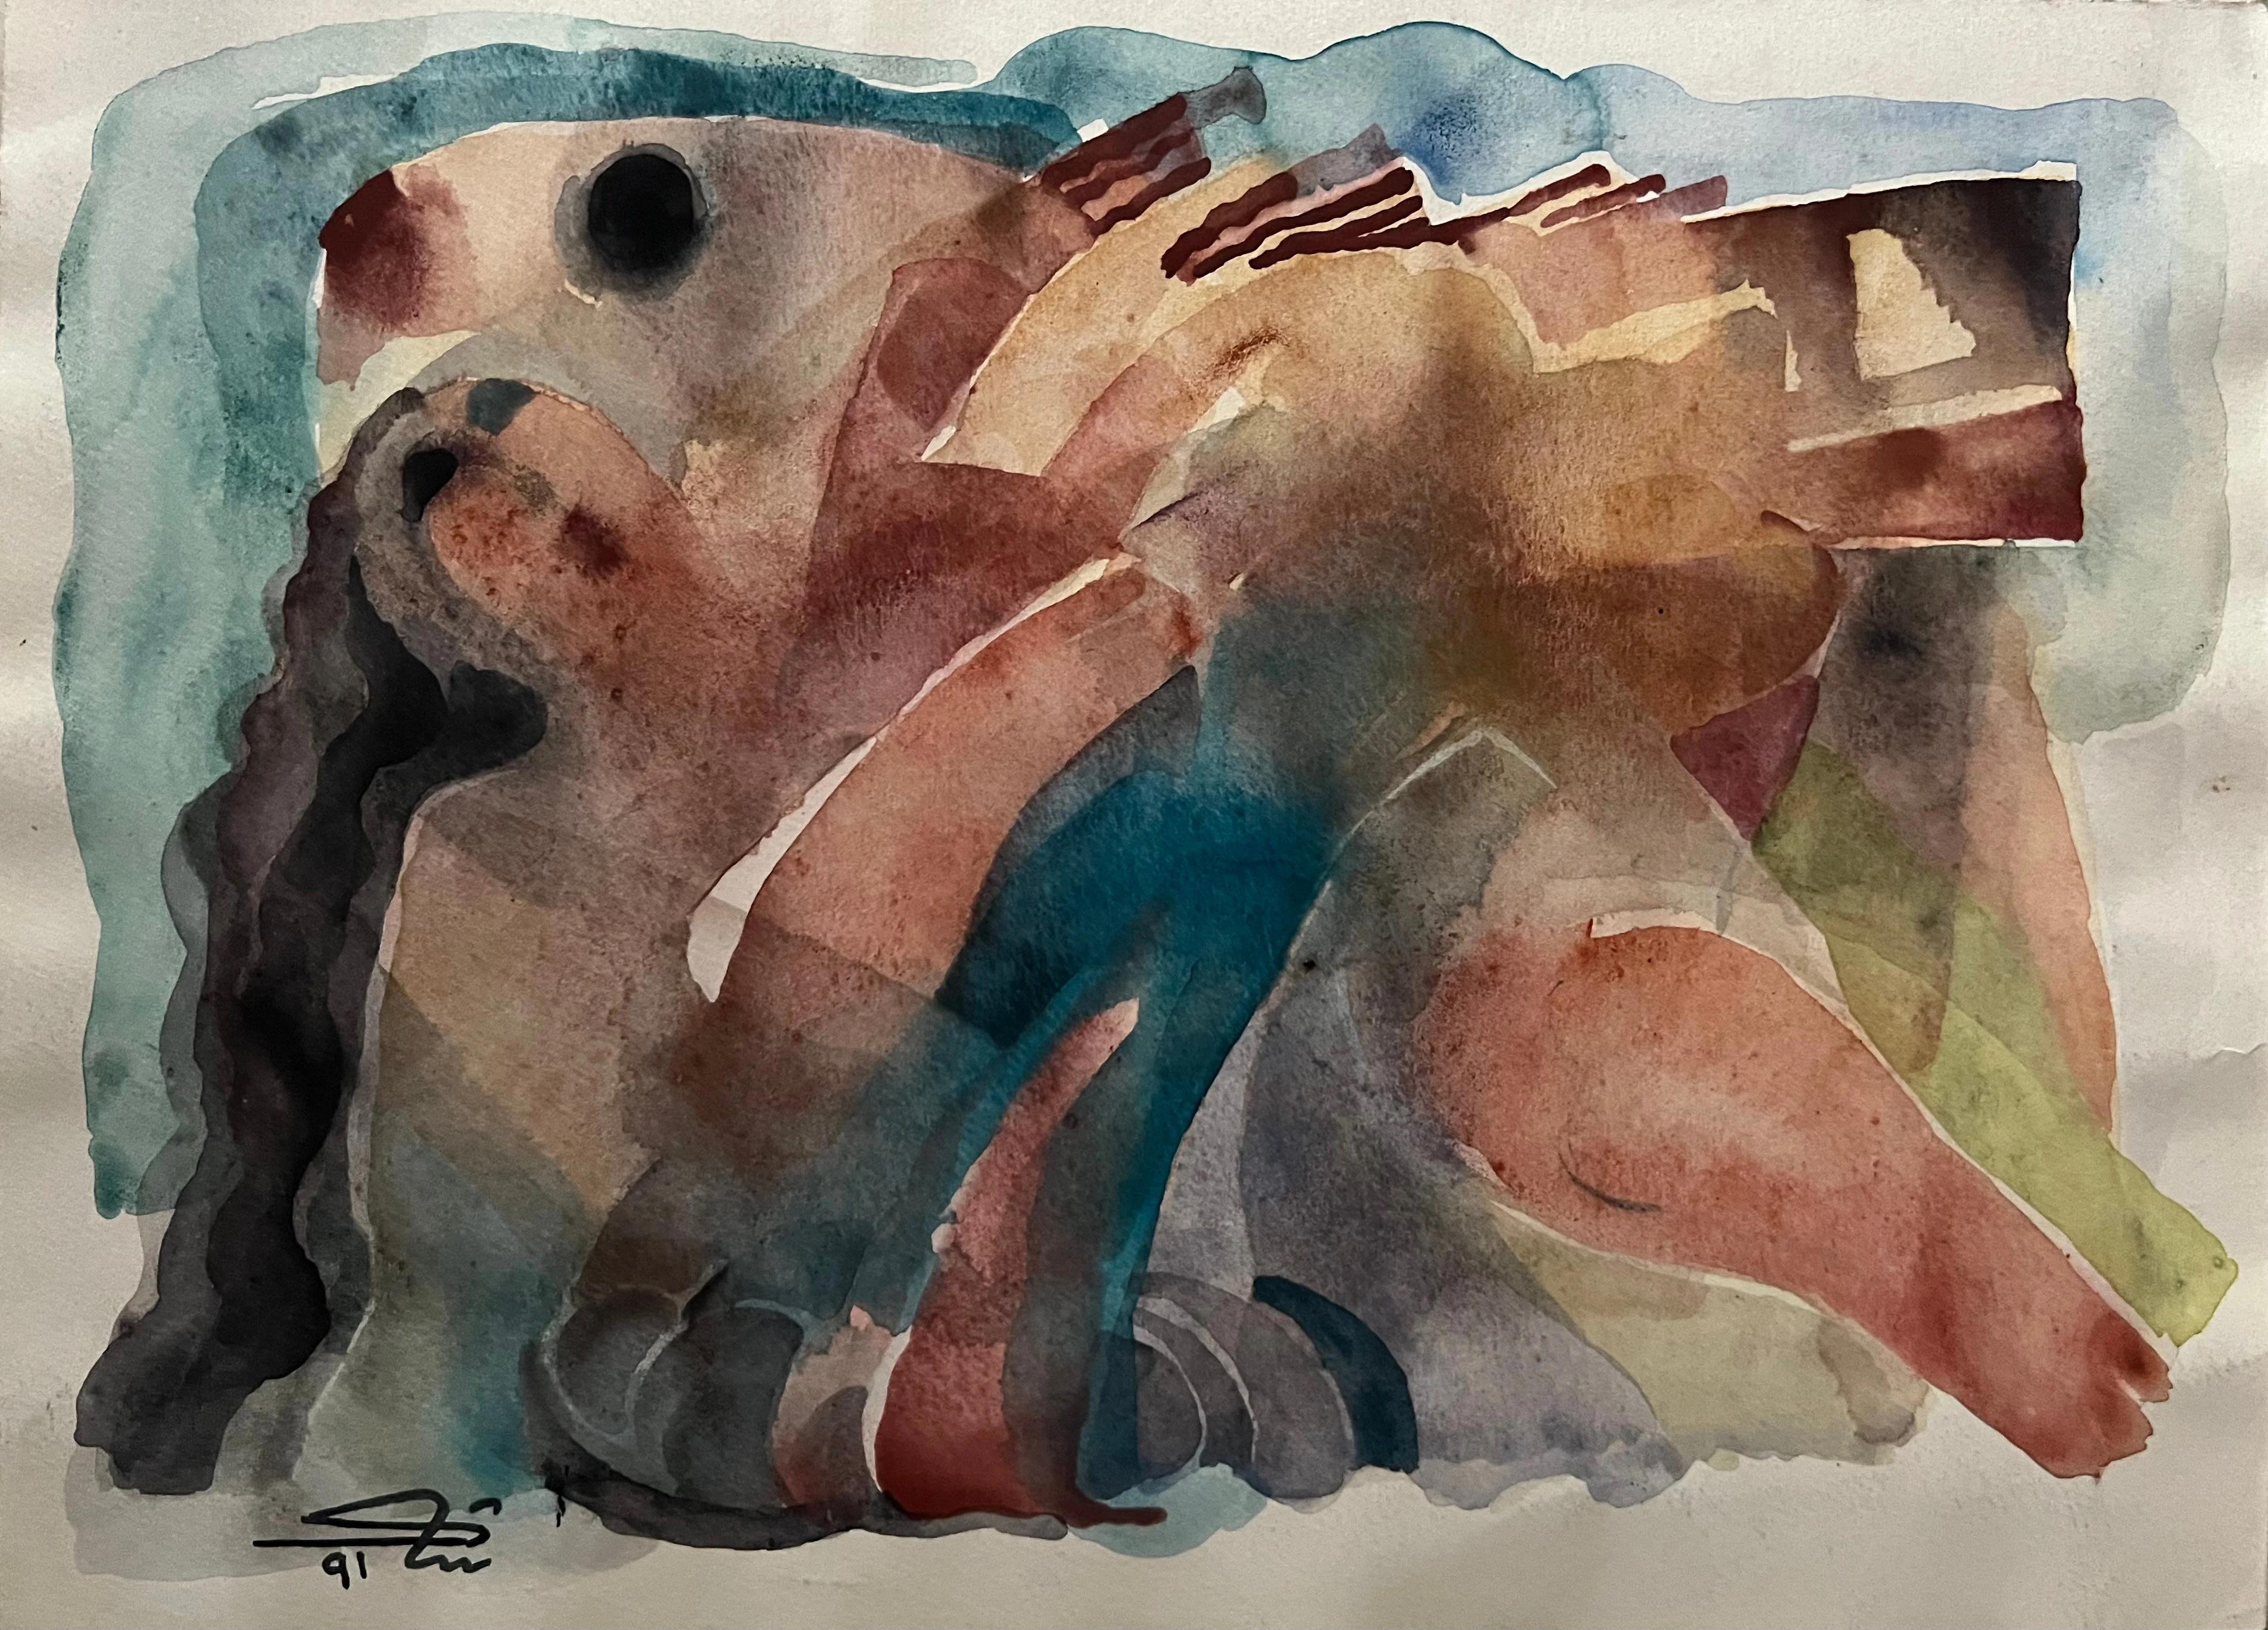 SHAKER EL MAADAWY Figurative Art - "Reclining Woman with Fish" Watercolor painting 11 x 14.5in by Shaker El Maadawy